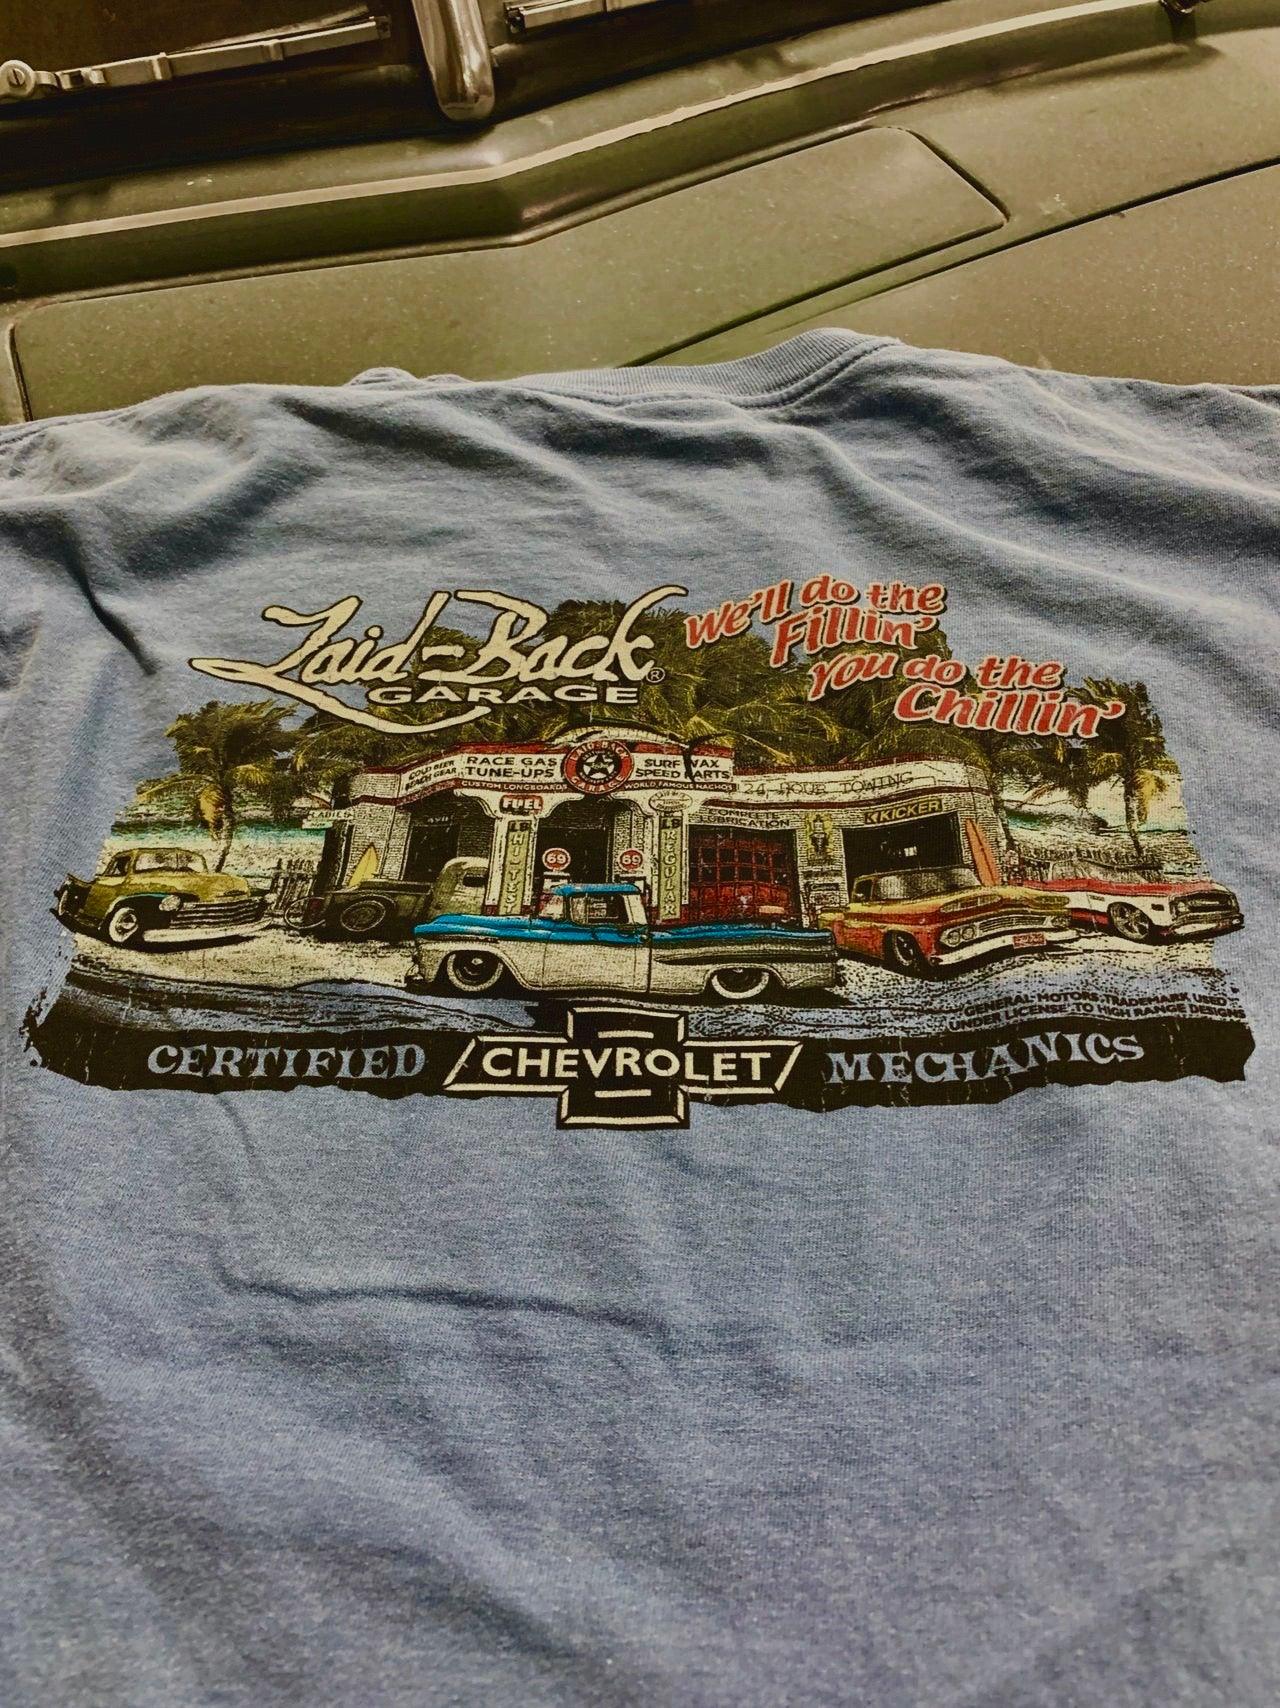 Dream Garage Chevy Trucks T-Shirt - Laid-Back